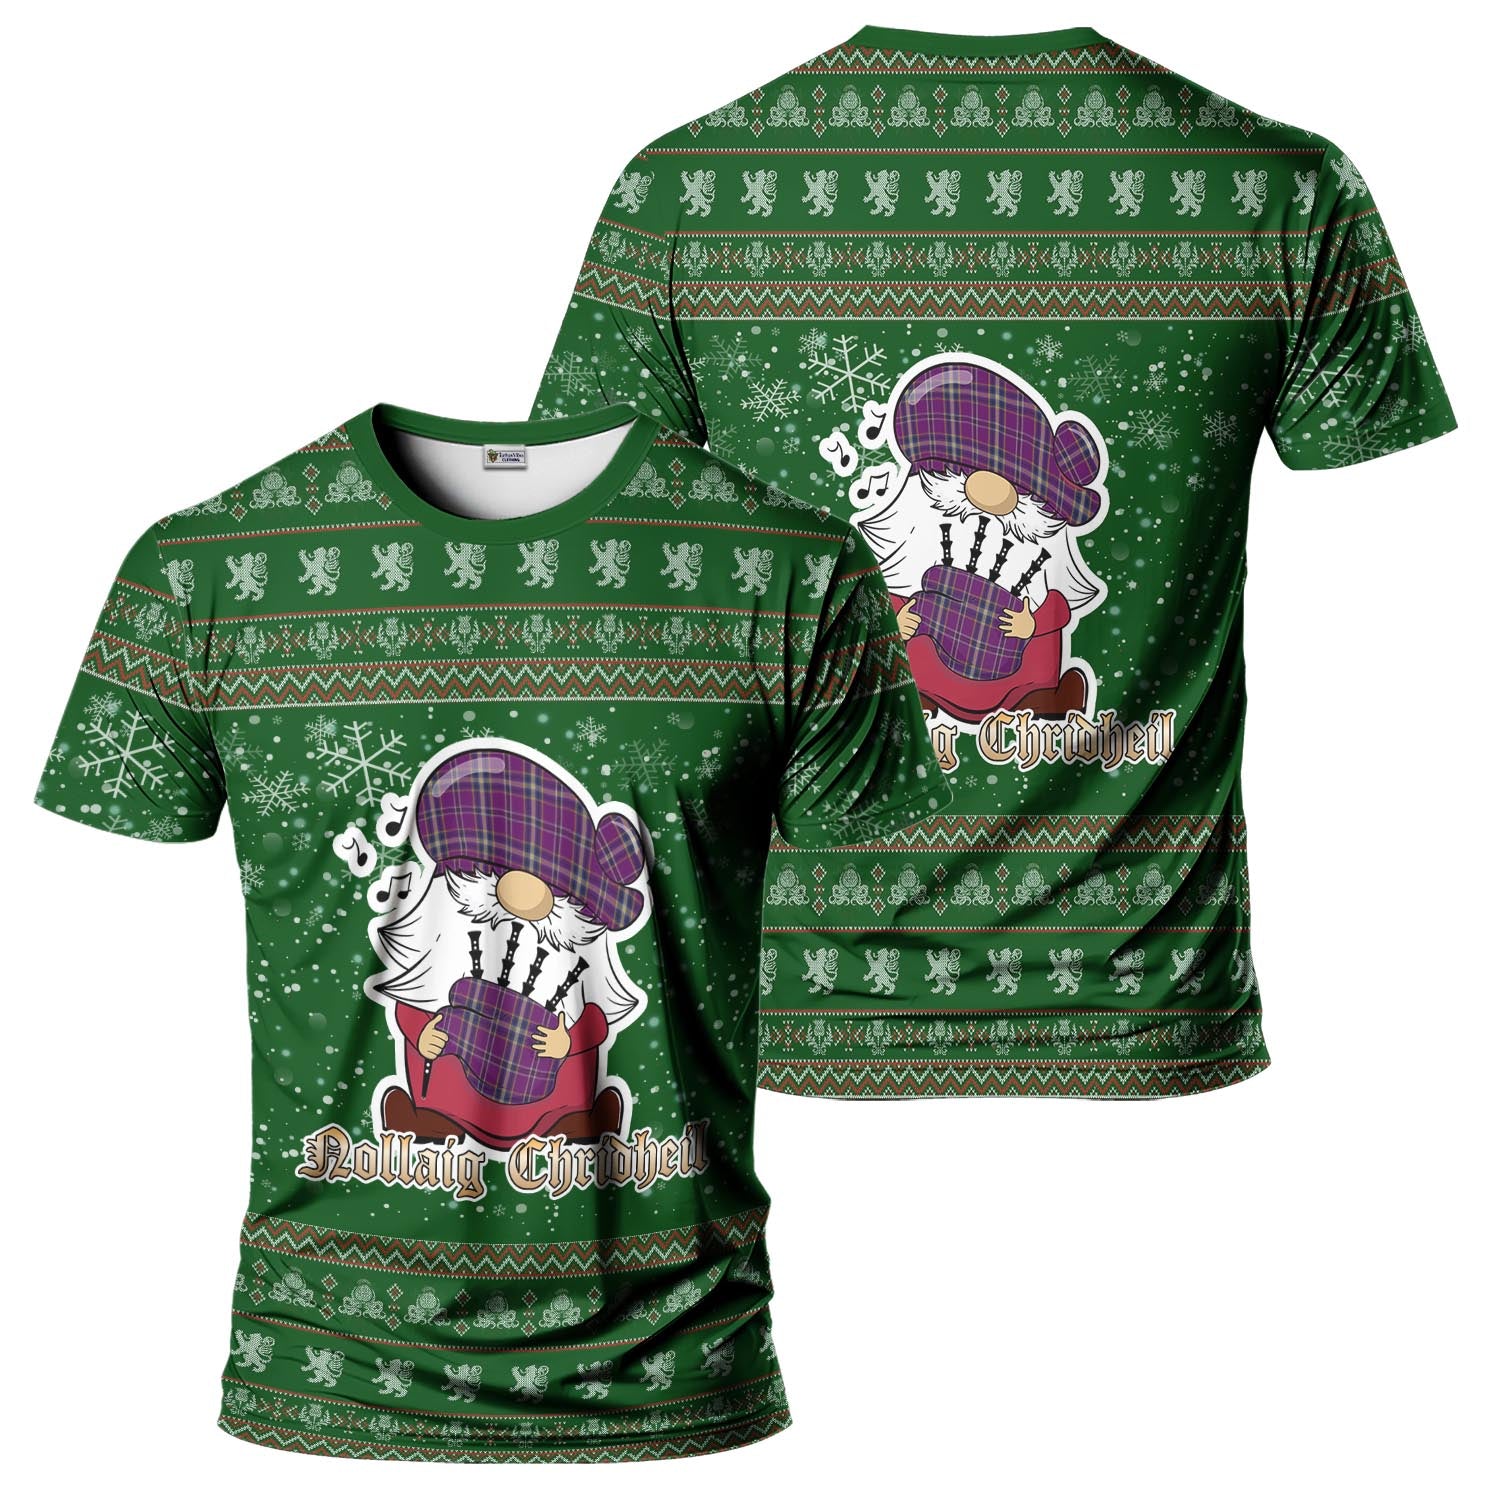 O'Riagain Clan Christmas Family T-Shirt with Funny Gnome Playing Bagpipes Men's Shirt Green - Tartanvibesclothing